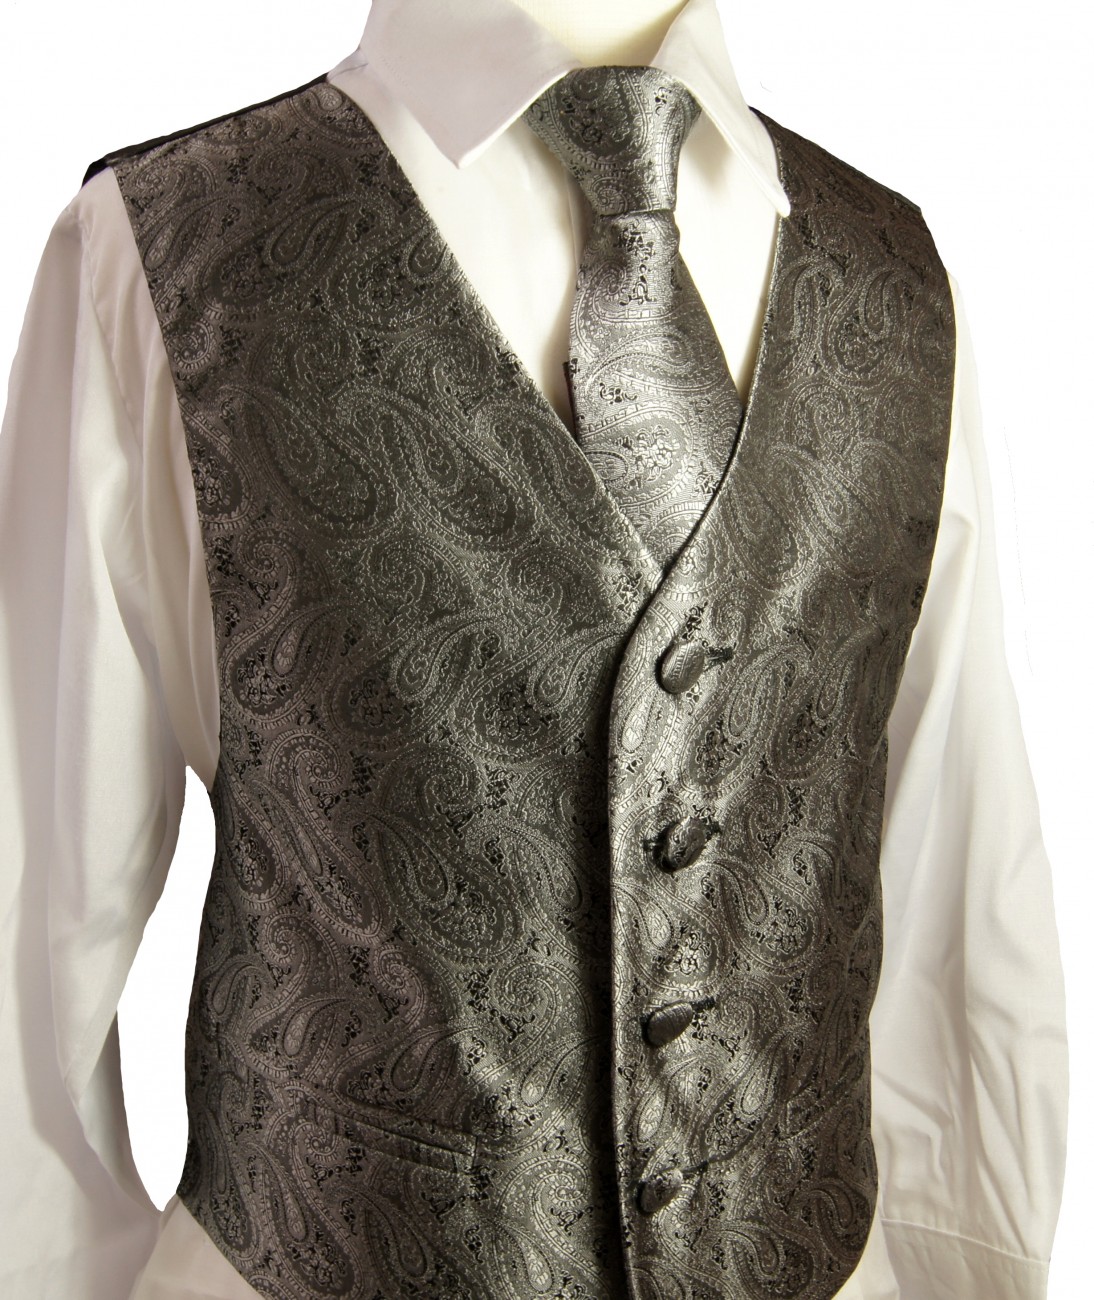 Gray paisley boys waistcoat and cravat set 2pcs - Paul Malone Shop